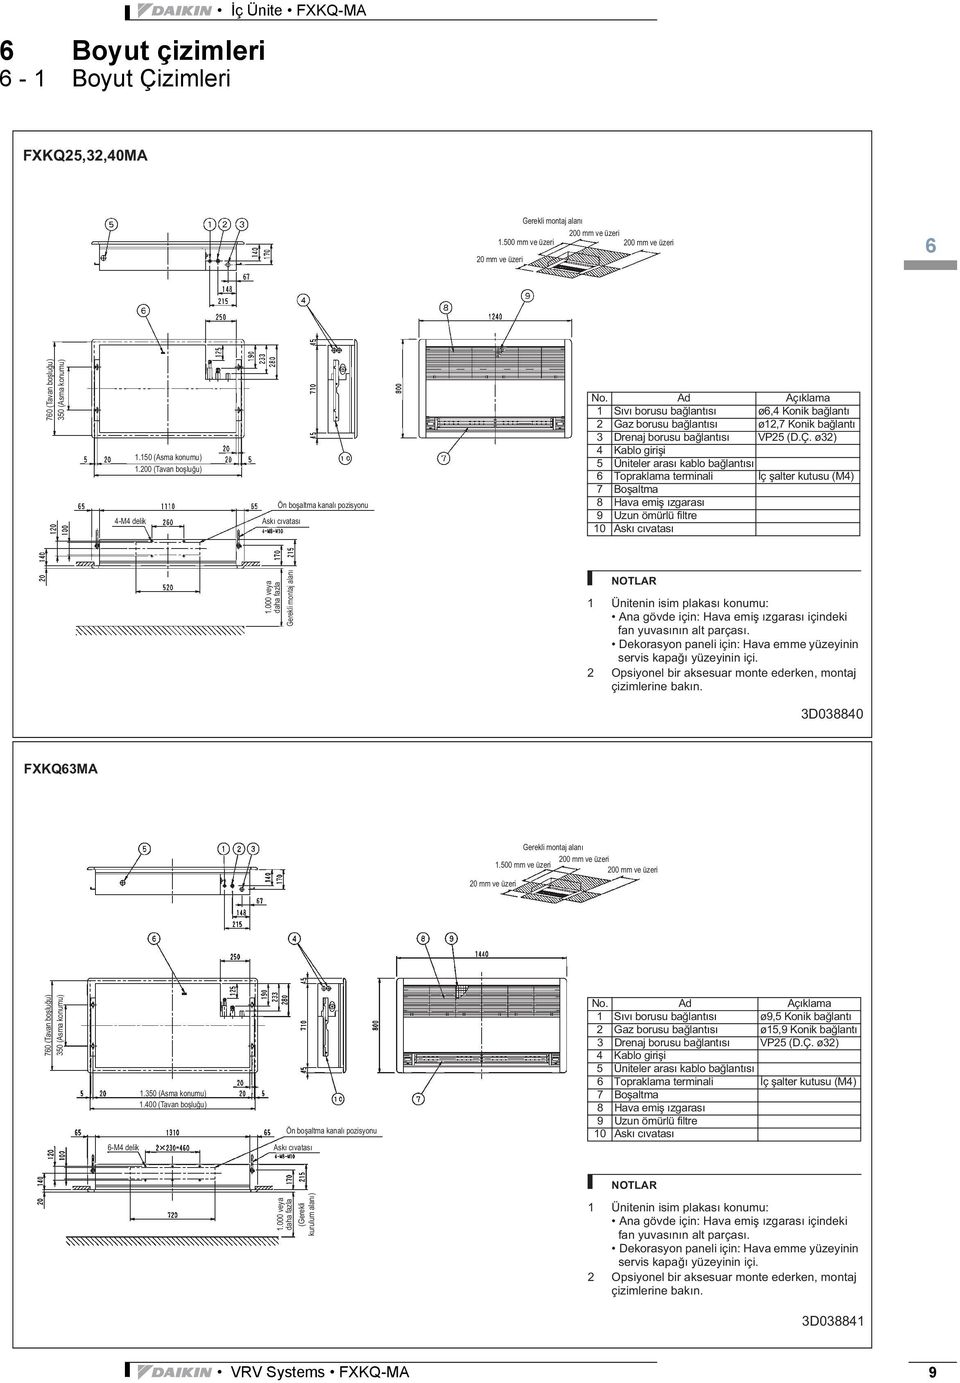 pdf 1 6/10/2011 11:27:00 AM Gerekli montaj alanı 200 mm ve üzeri 1.500 mm ve üzeri 200 mm ve üzeri 20 mm ve üzeri 760 (Tavan boşluğu) 350 (Asma konumu) 1.